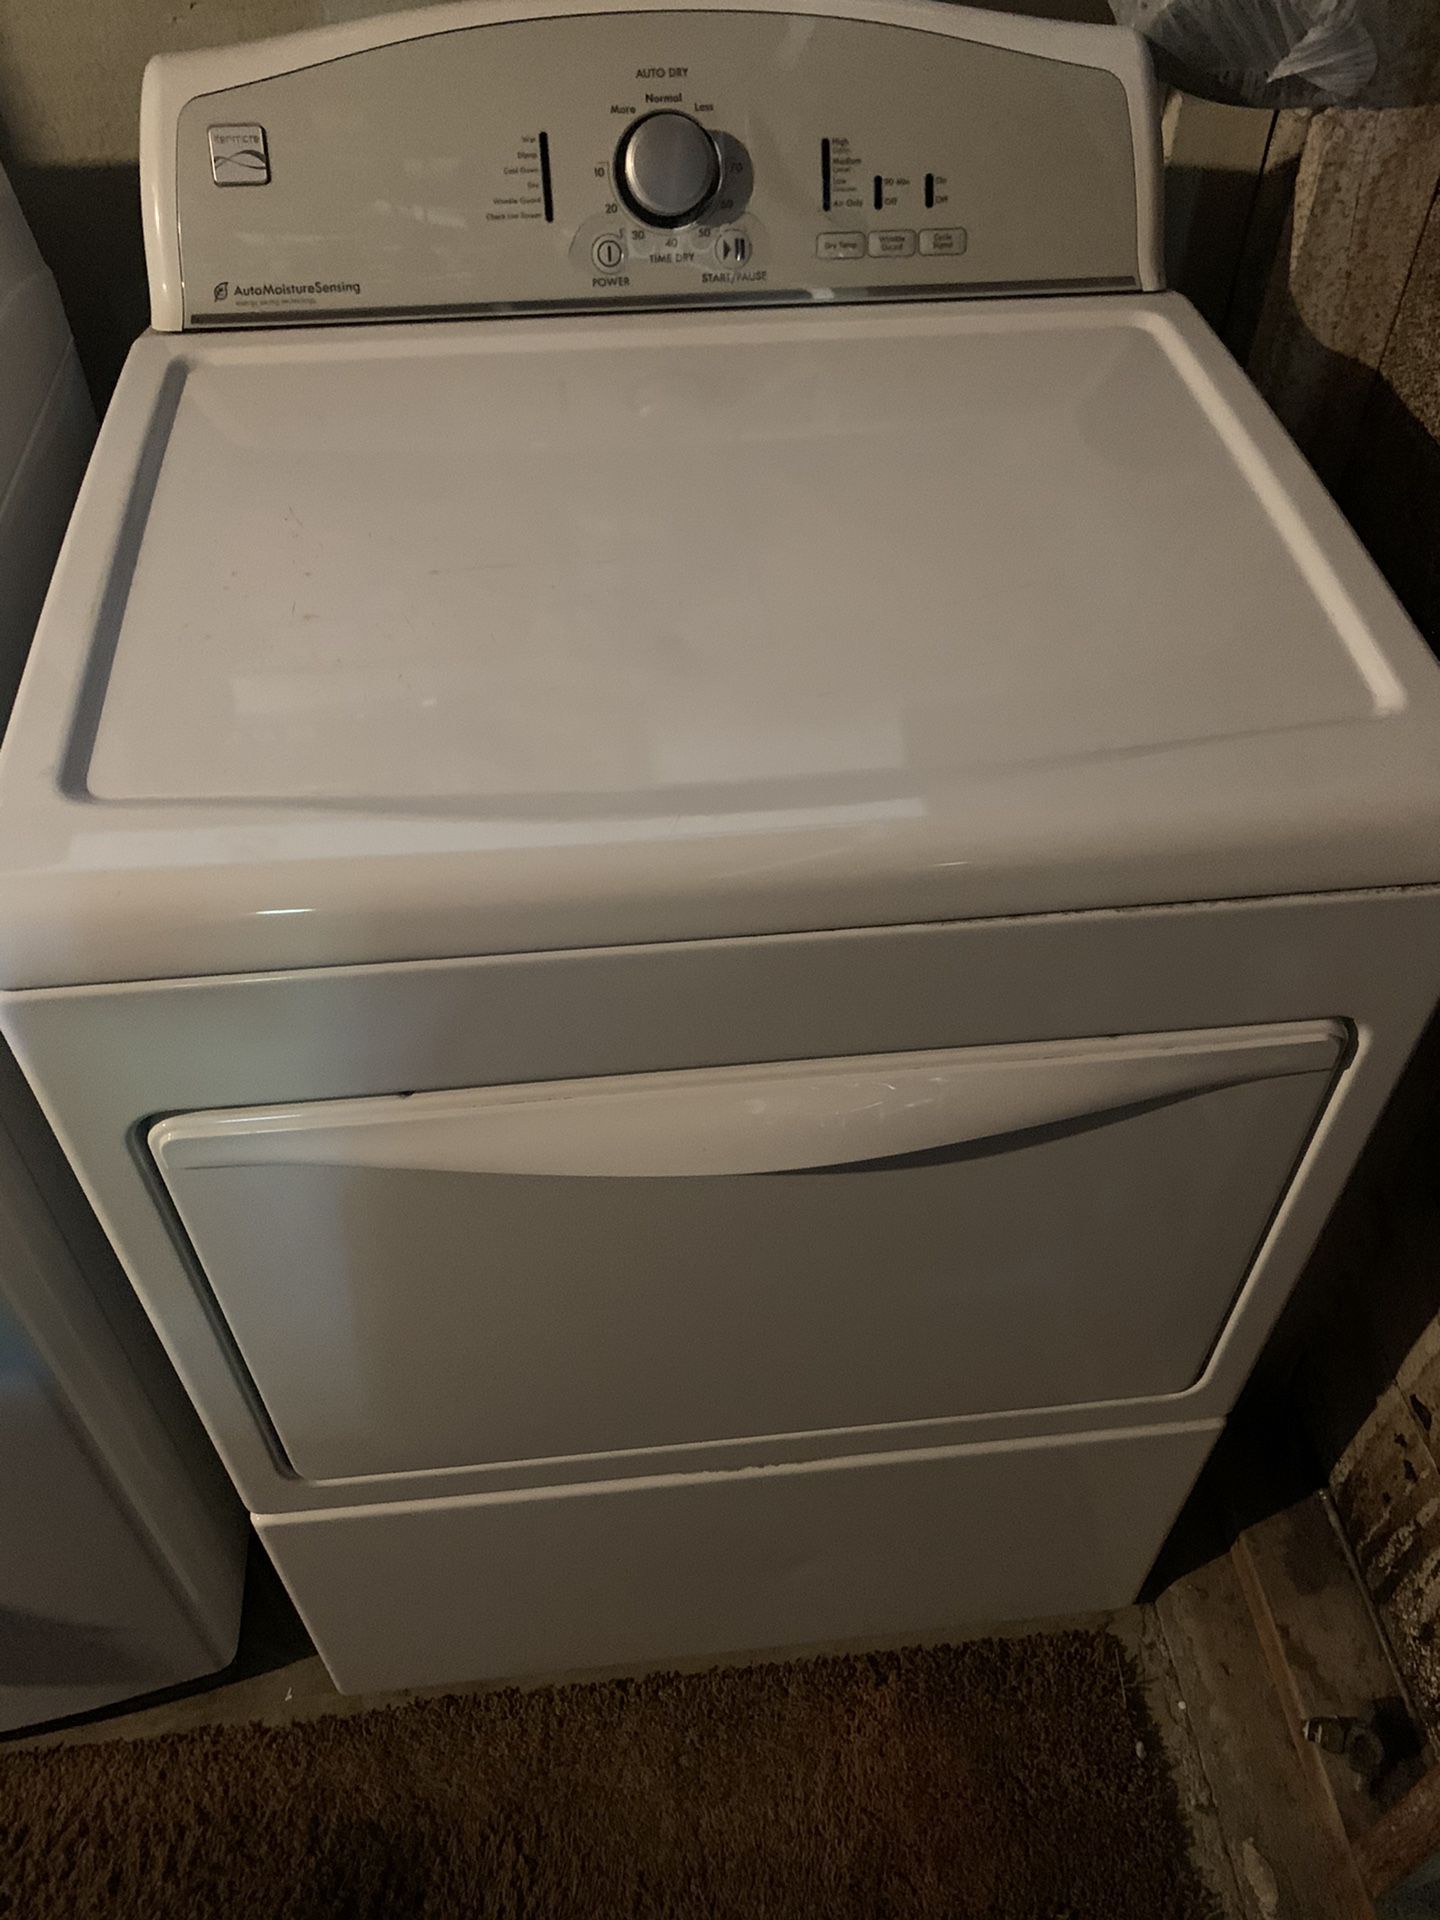 Free Kenmore Dryer (please read description)